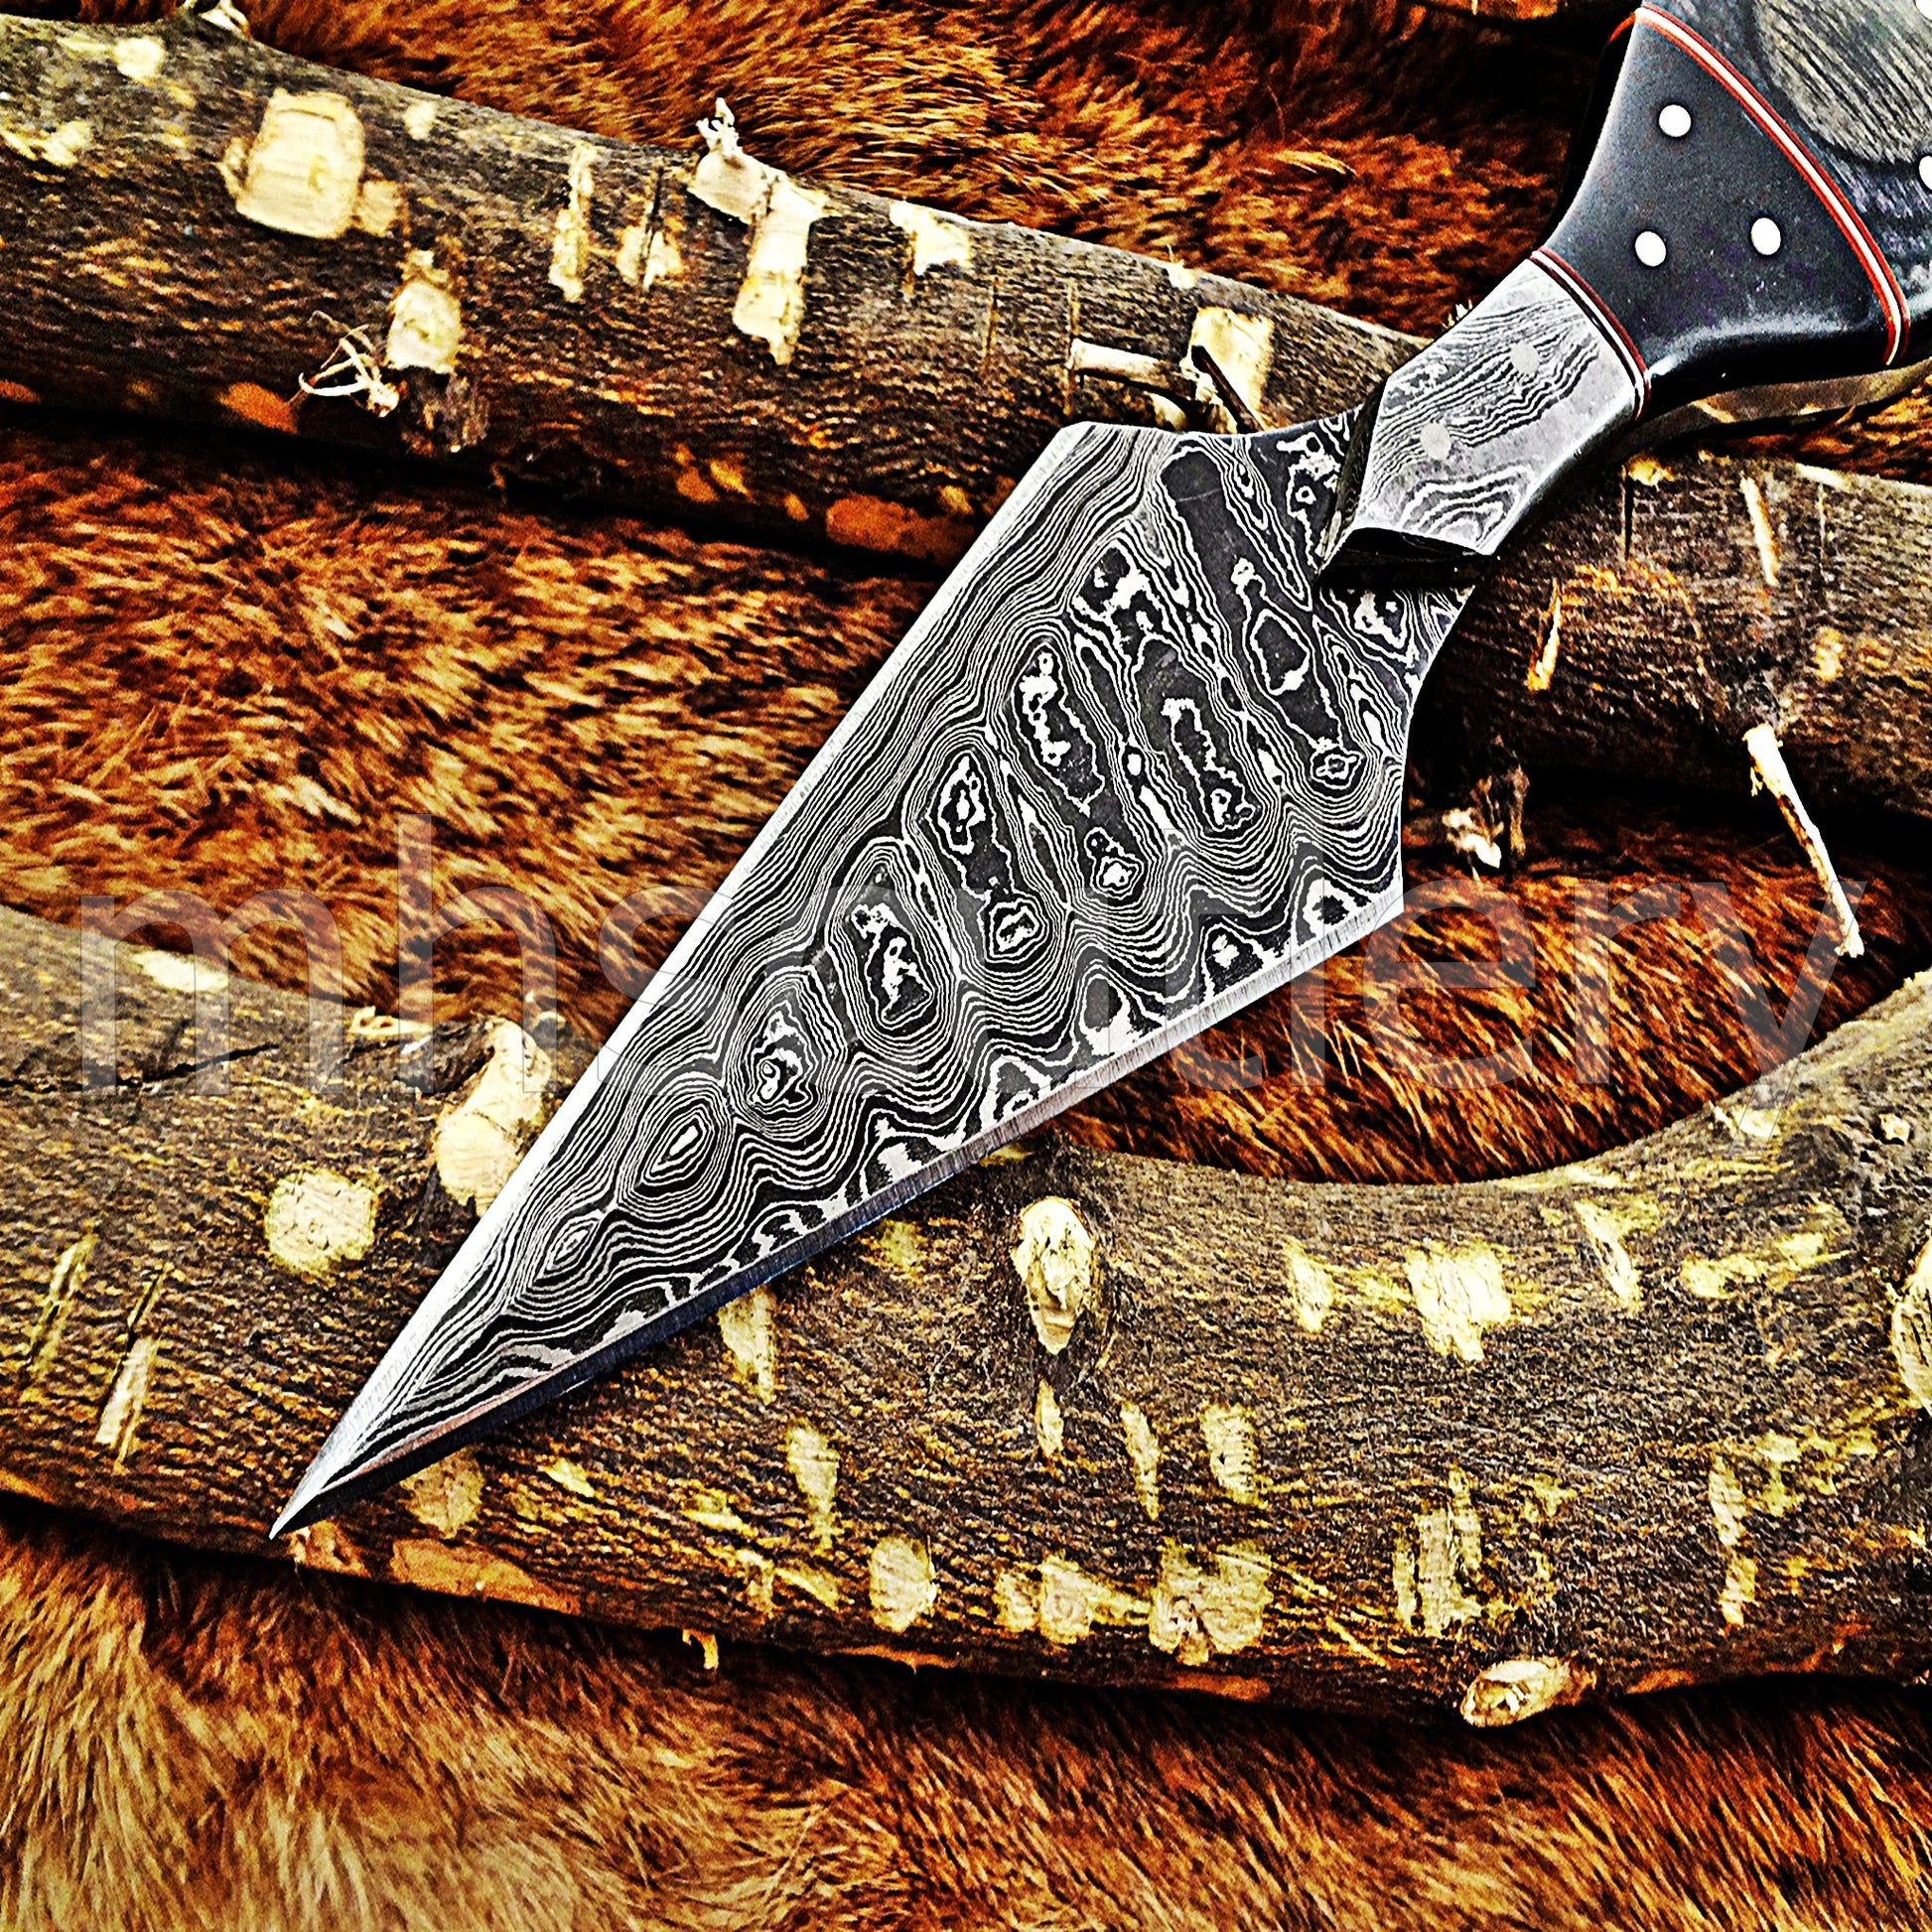 Damascus Steel Tactical Dagger Knife | mhscutlery